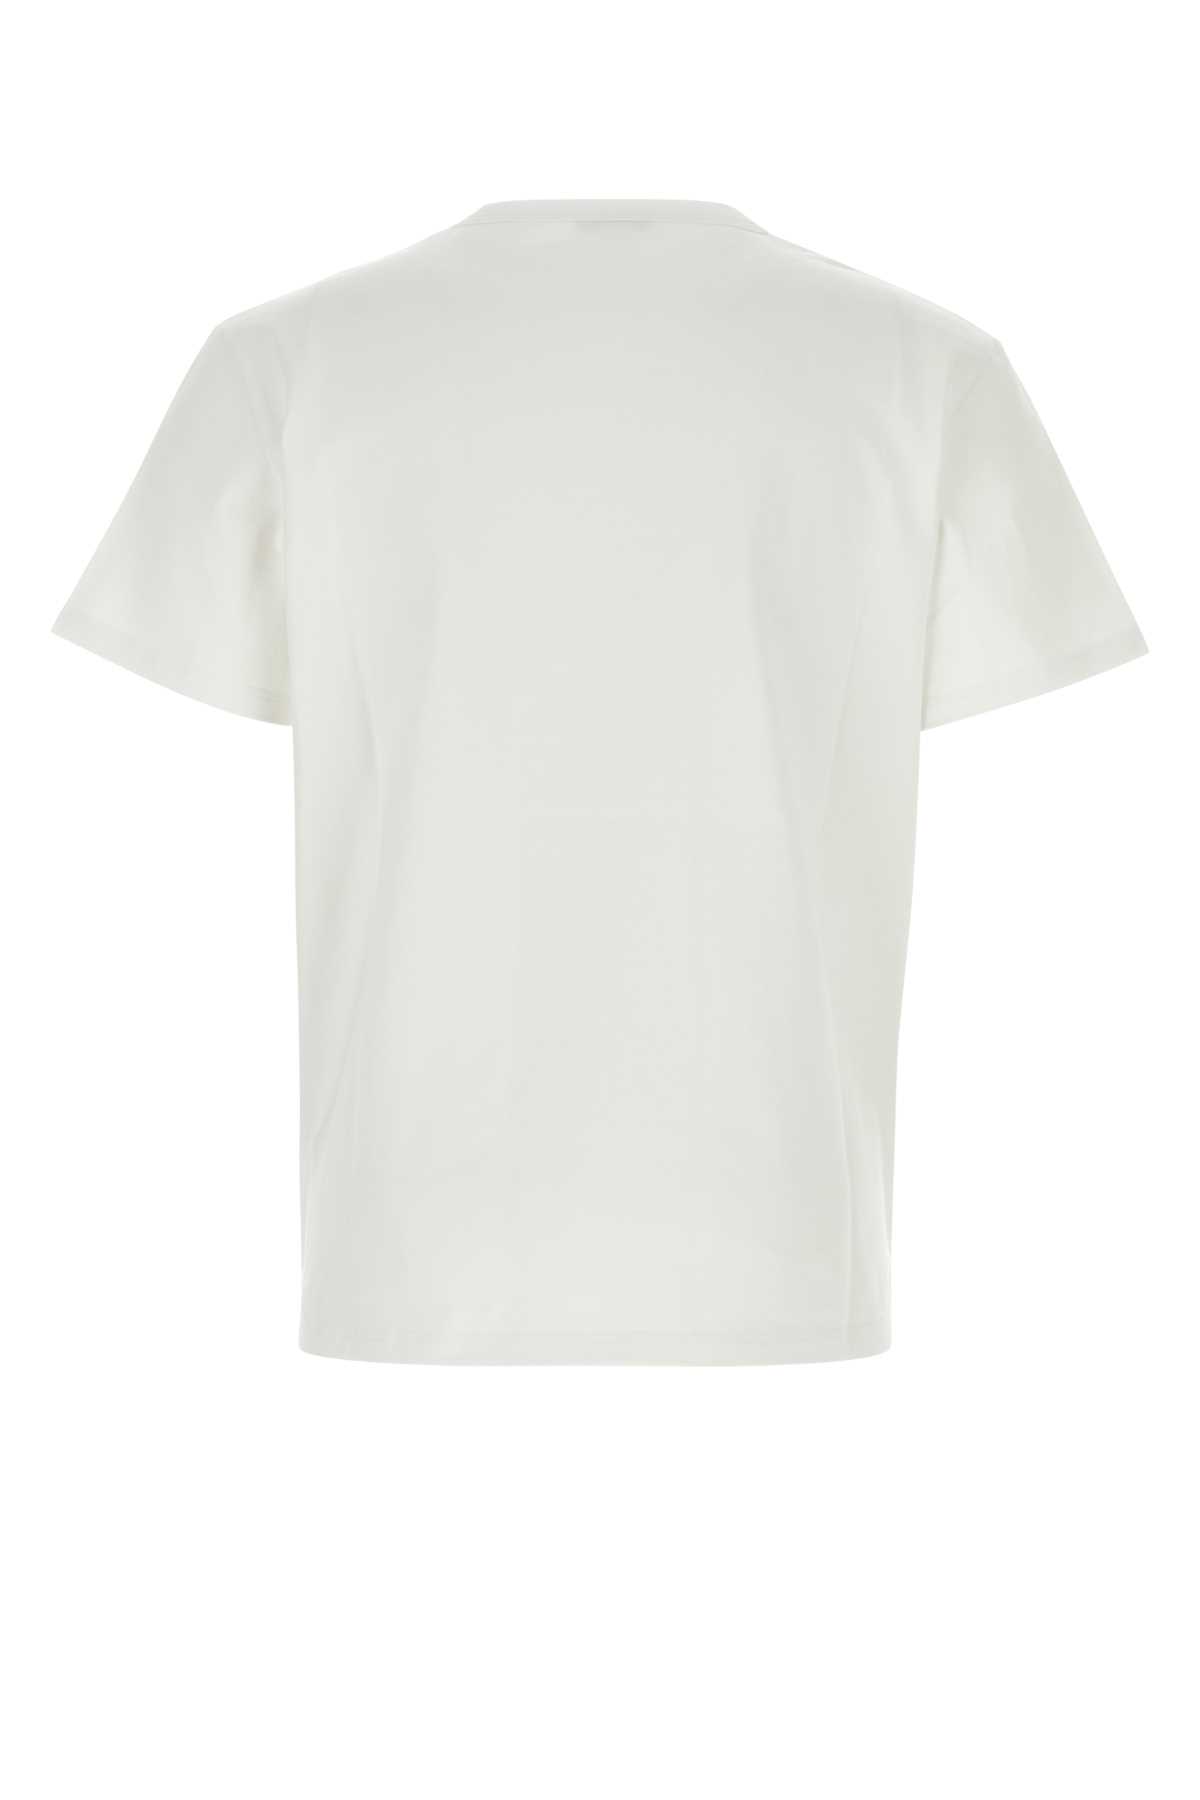 Alexander Mcqueen White Cotton T-shirt In Whiteblack